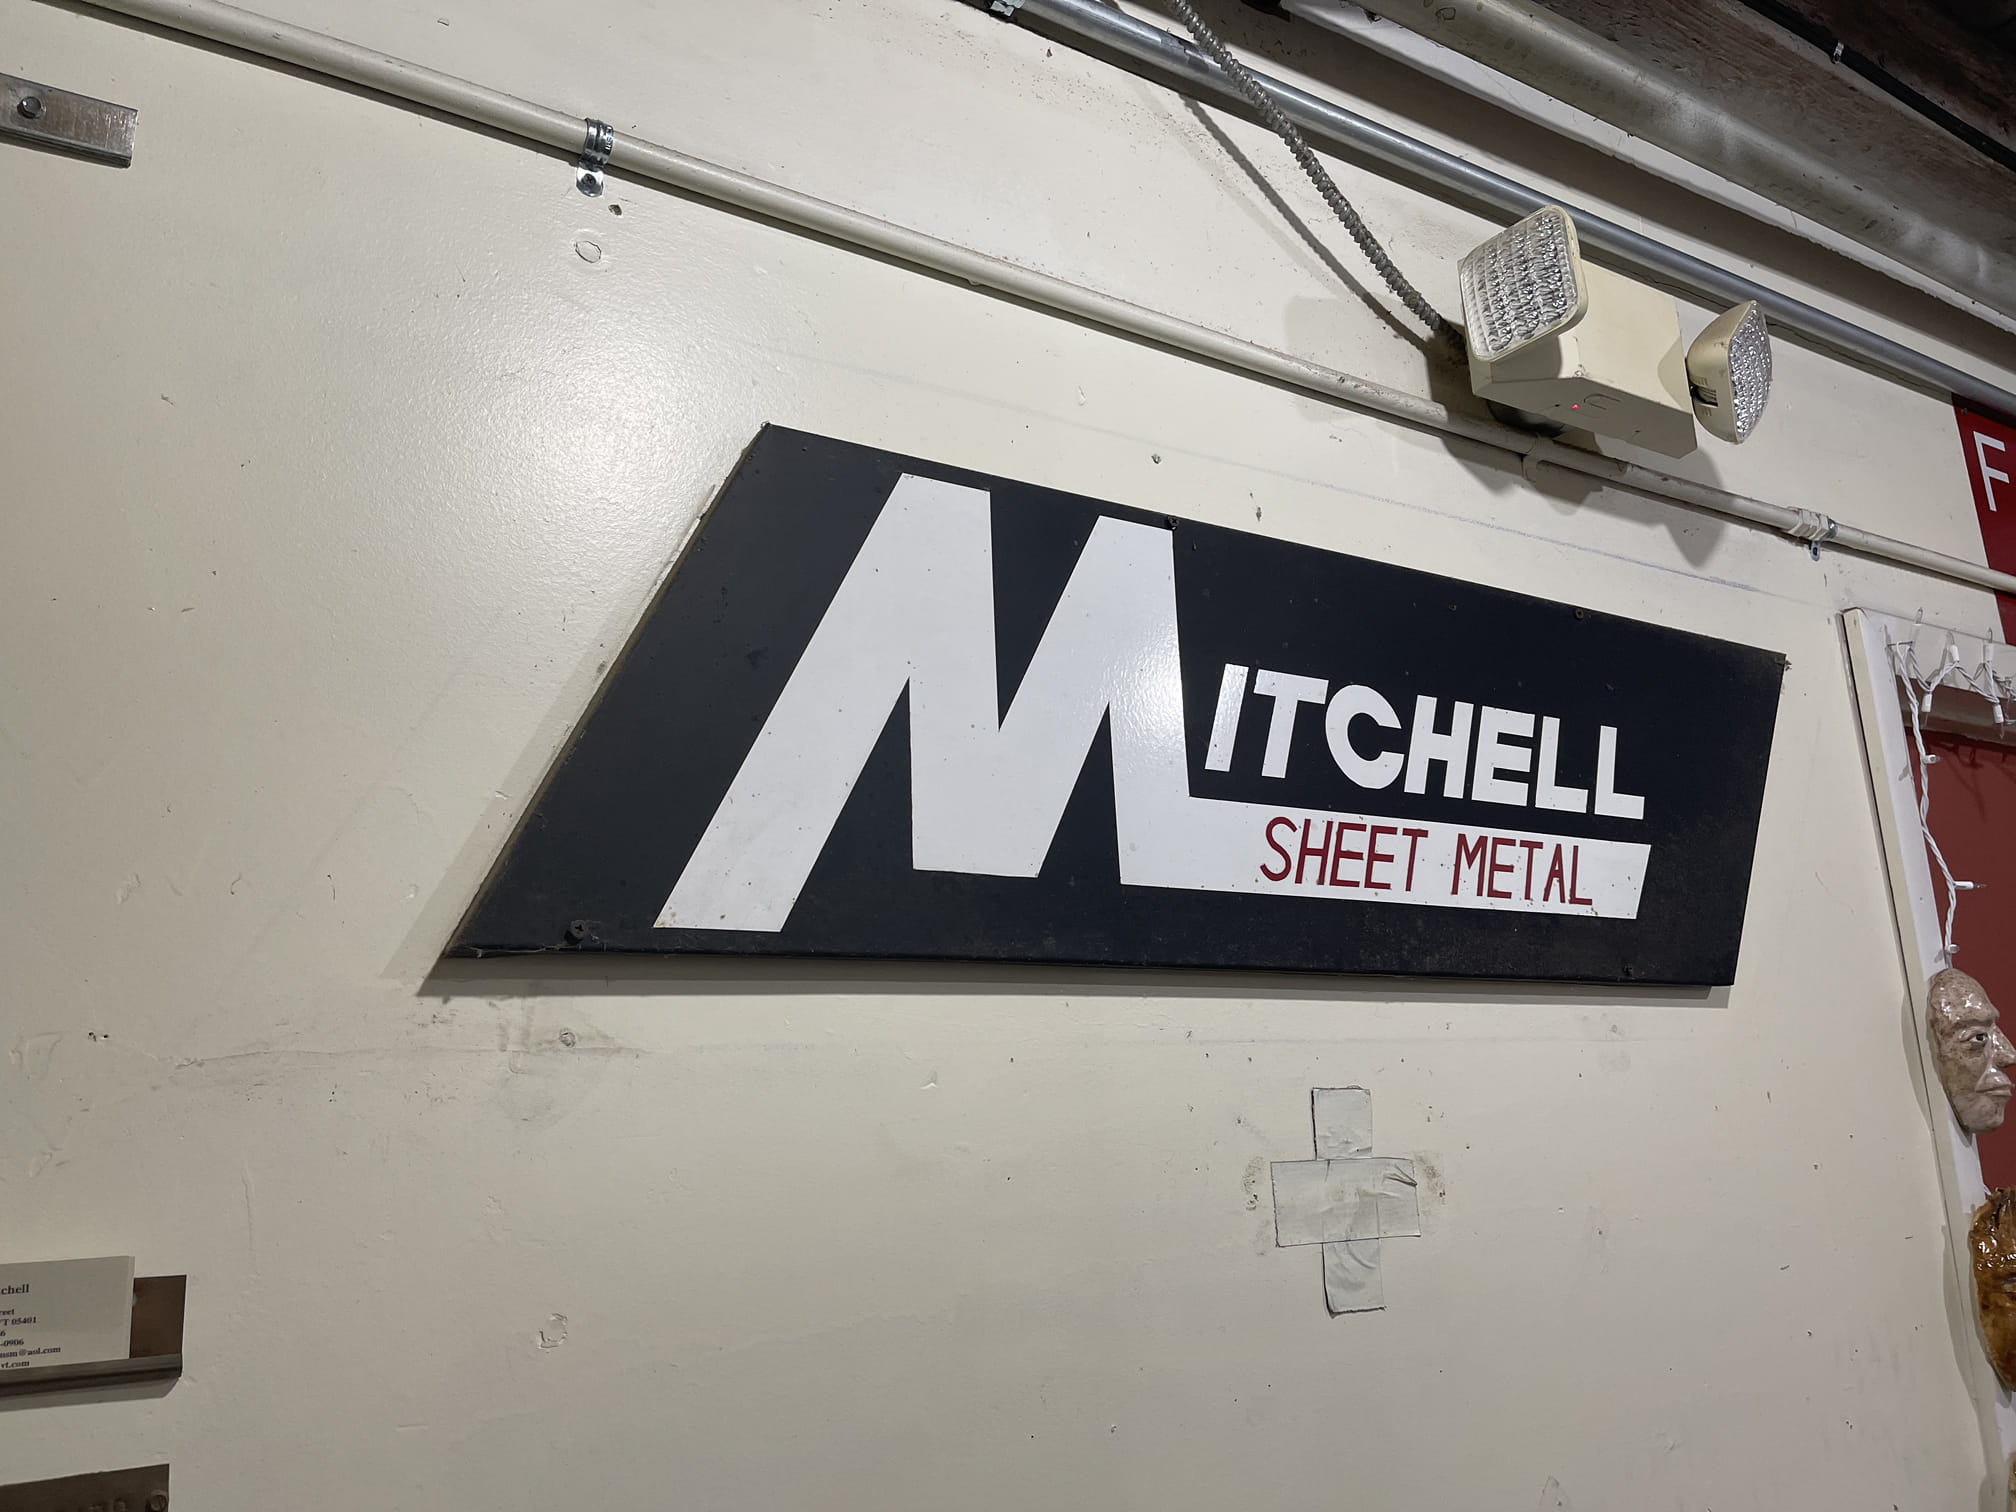 Mitchell sheet metal burlington vermont